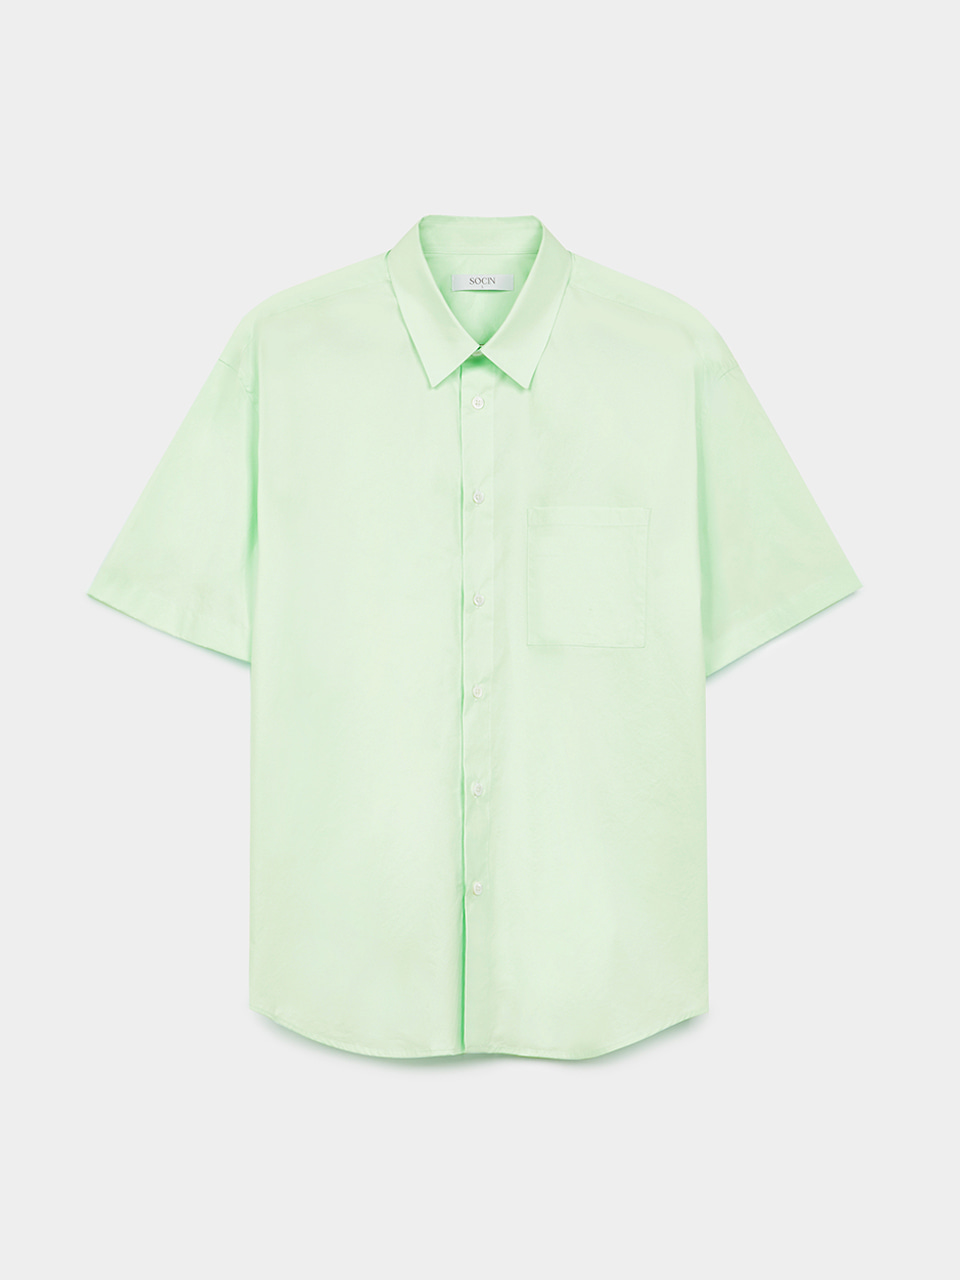 Washer Cotton Half Shirts (Light Mint)